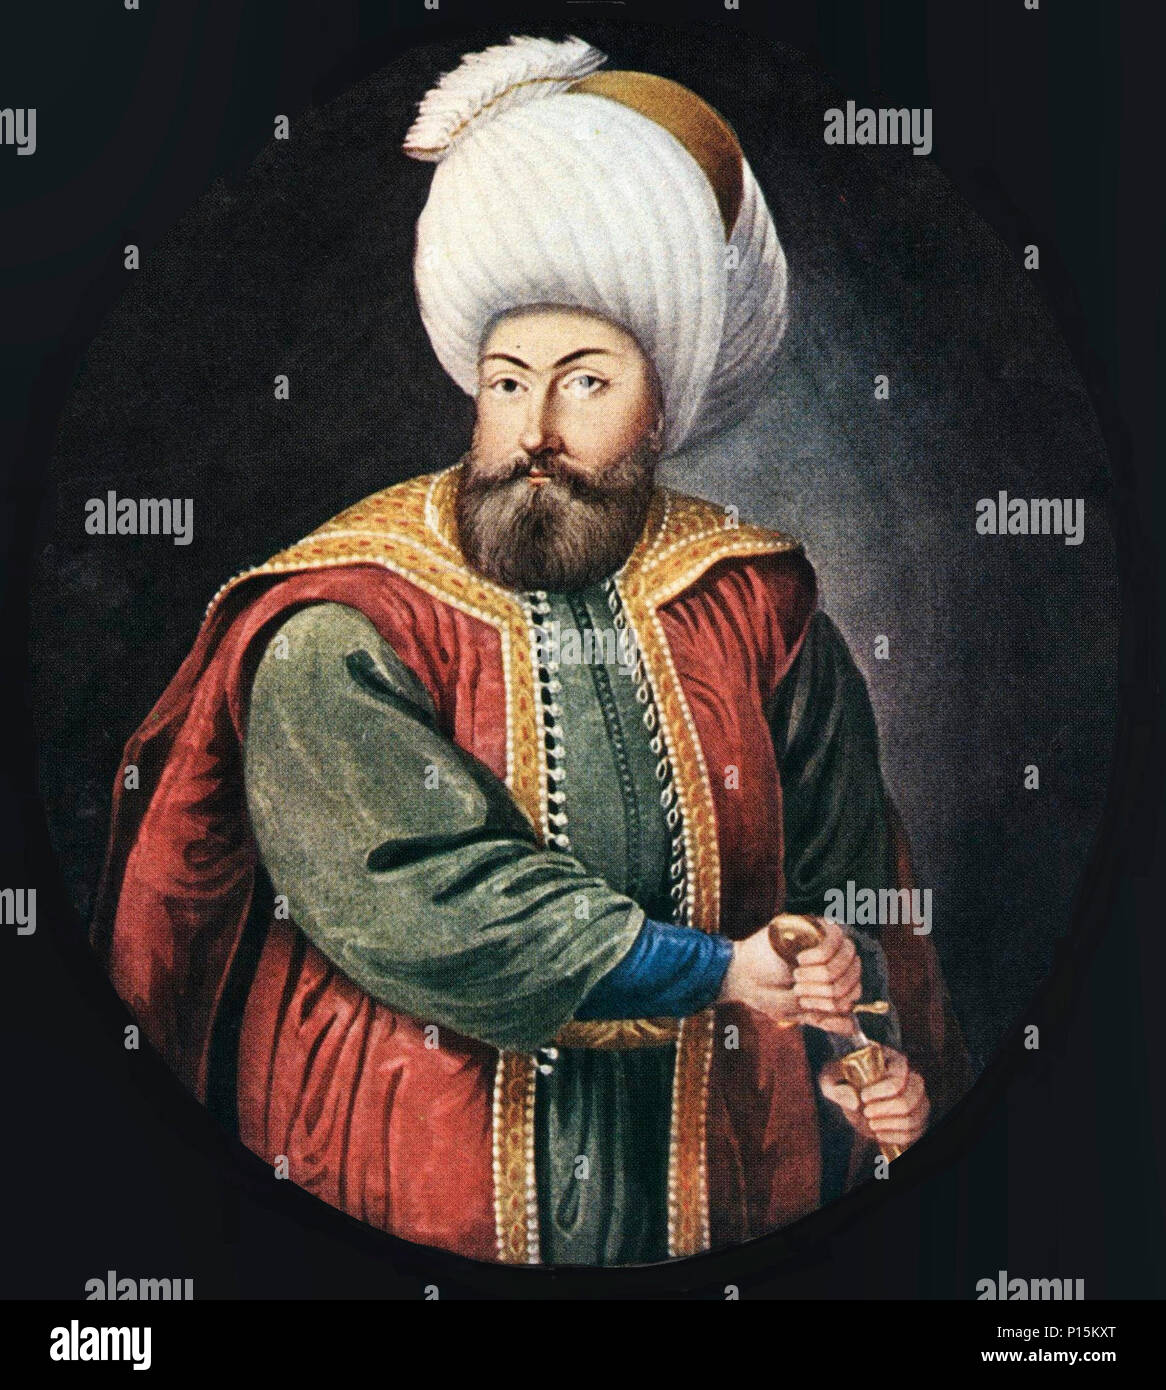 Sultan Osman I - Sultan Gazi 'Father of kings' Uthman (Osman) Han I. Ottoman Empire, circa 1300 Stock Photo